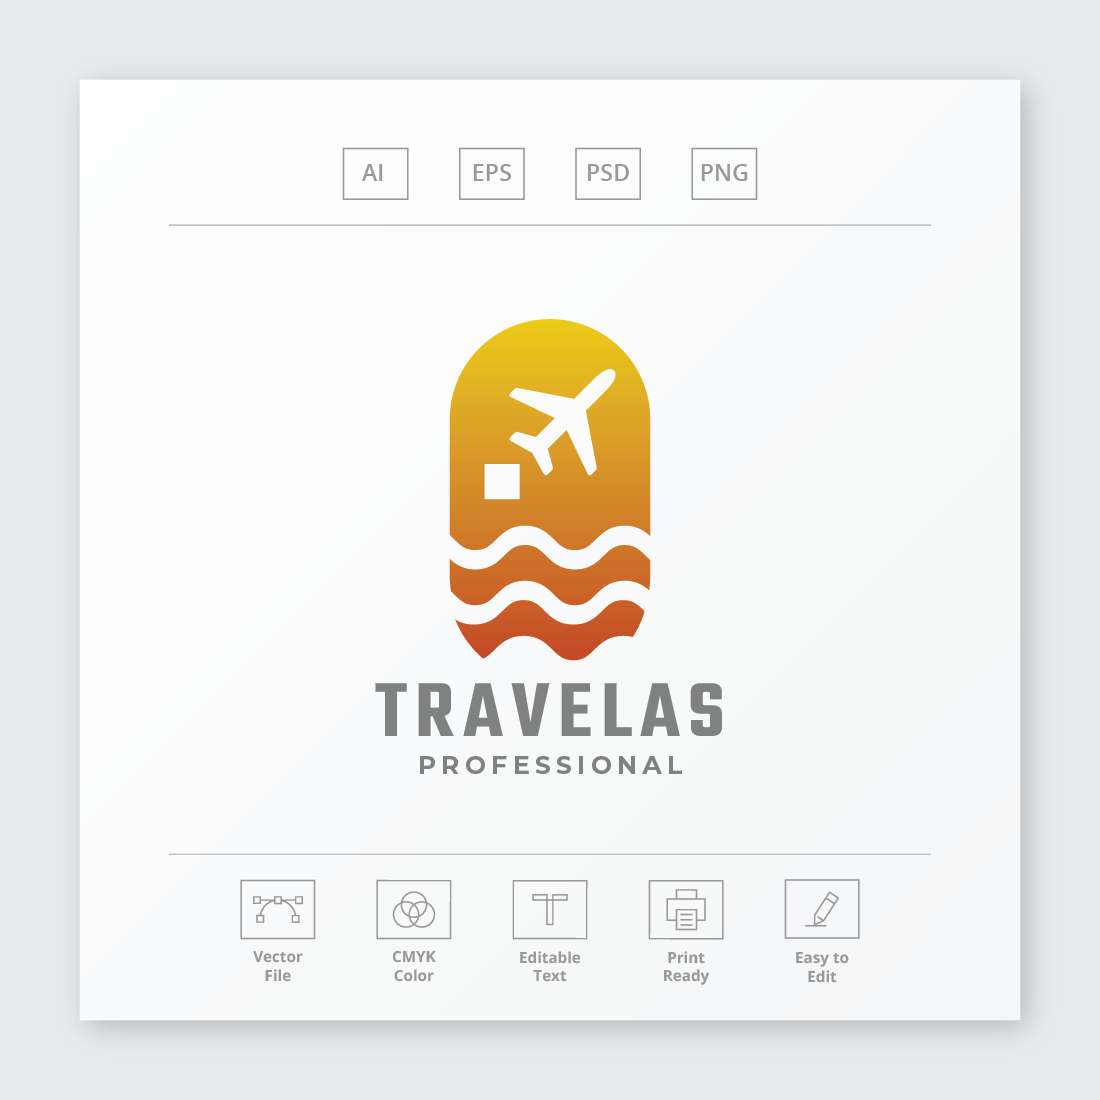 Sea Sun Travel Agent Logo cover image.